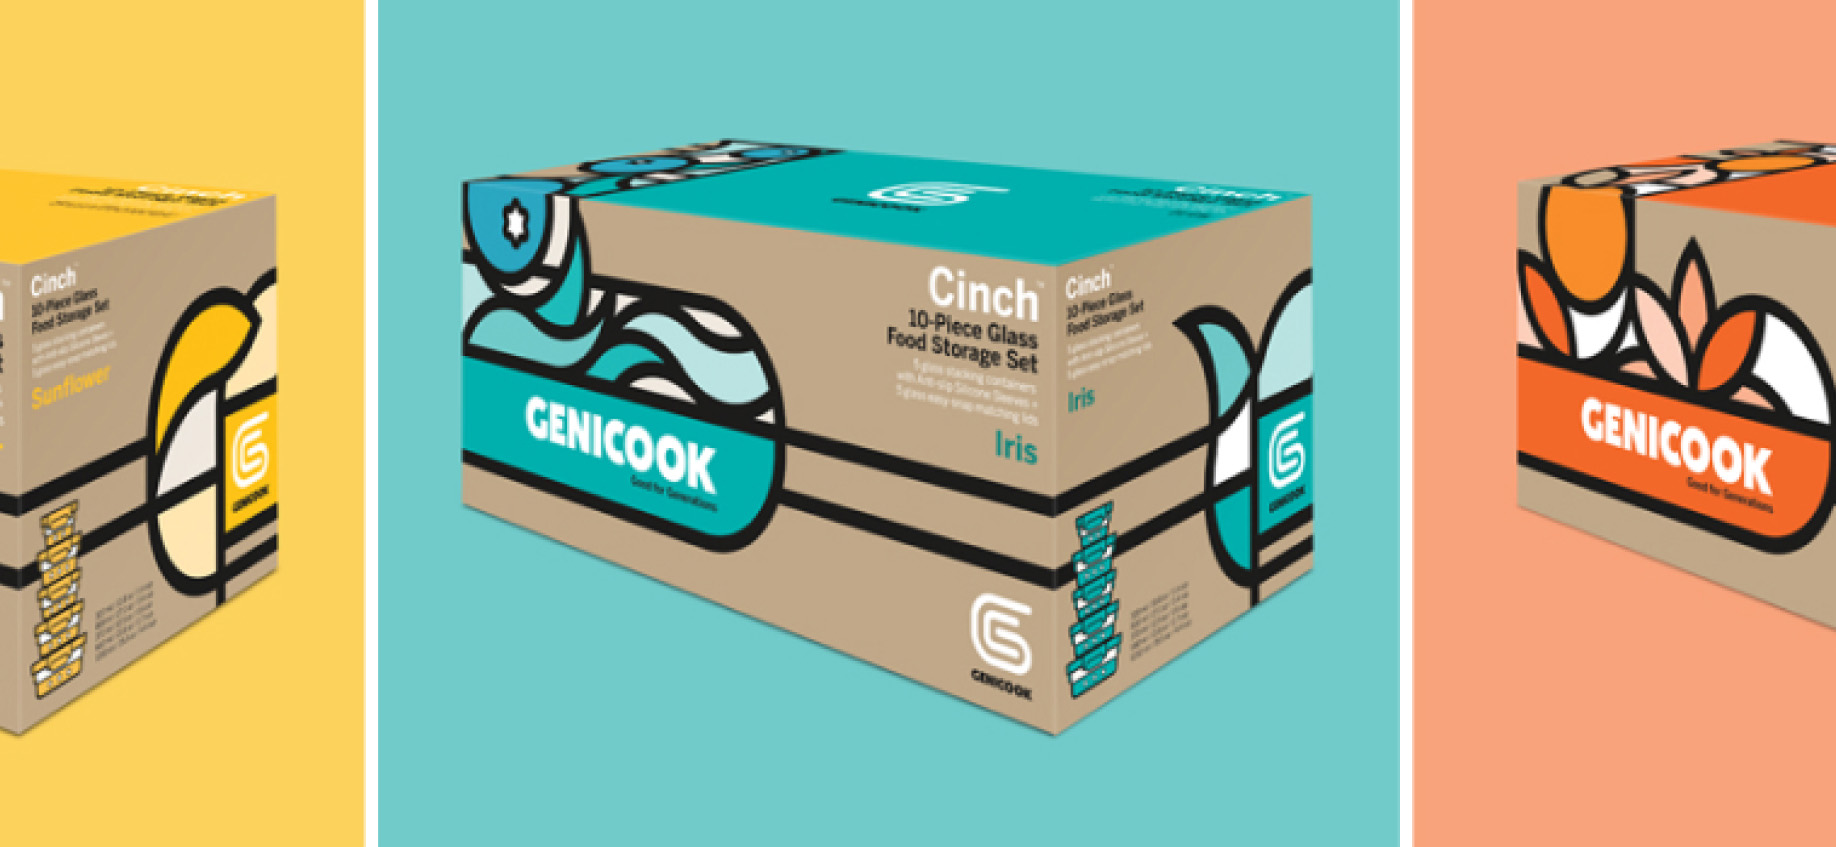 Genicook Box